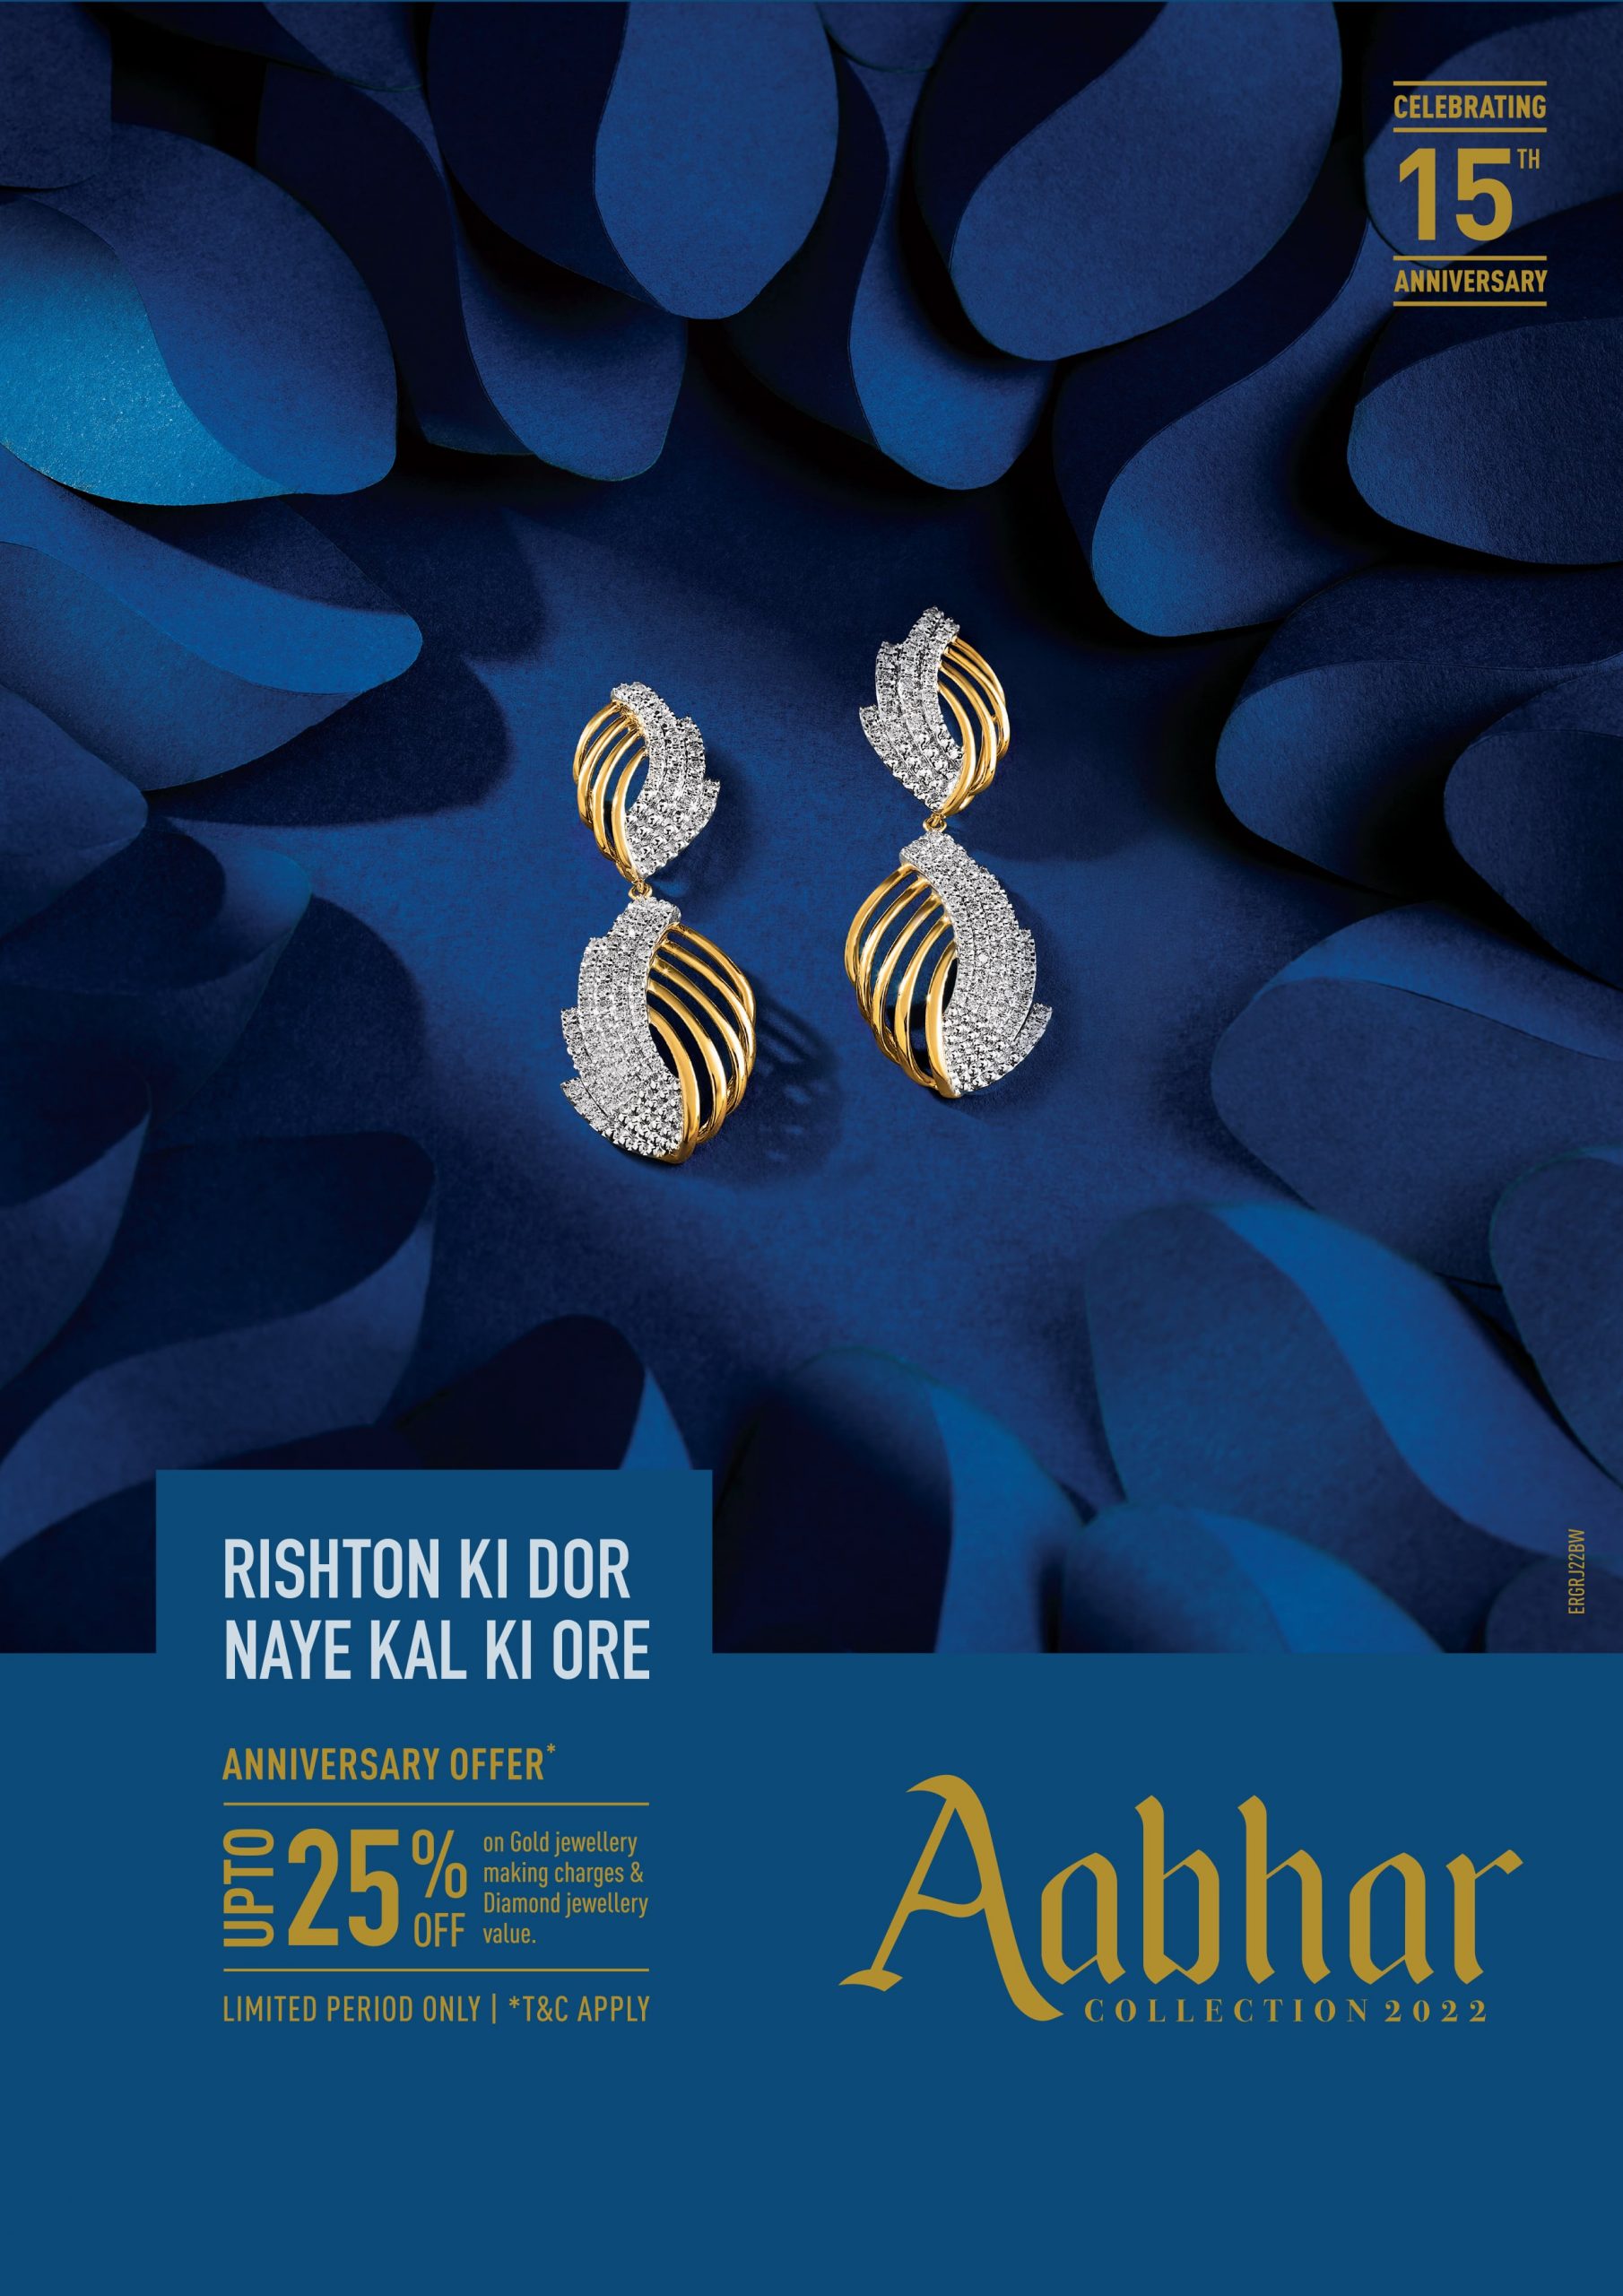 Reliance Jewels celebrates their 15th anniversary with the campaign “AABHAR 2022- Rishton ki dor, naye kal ki ore”